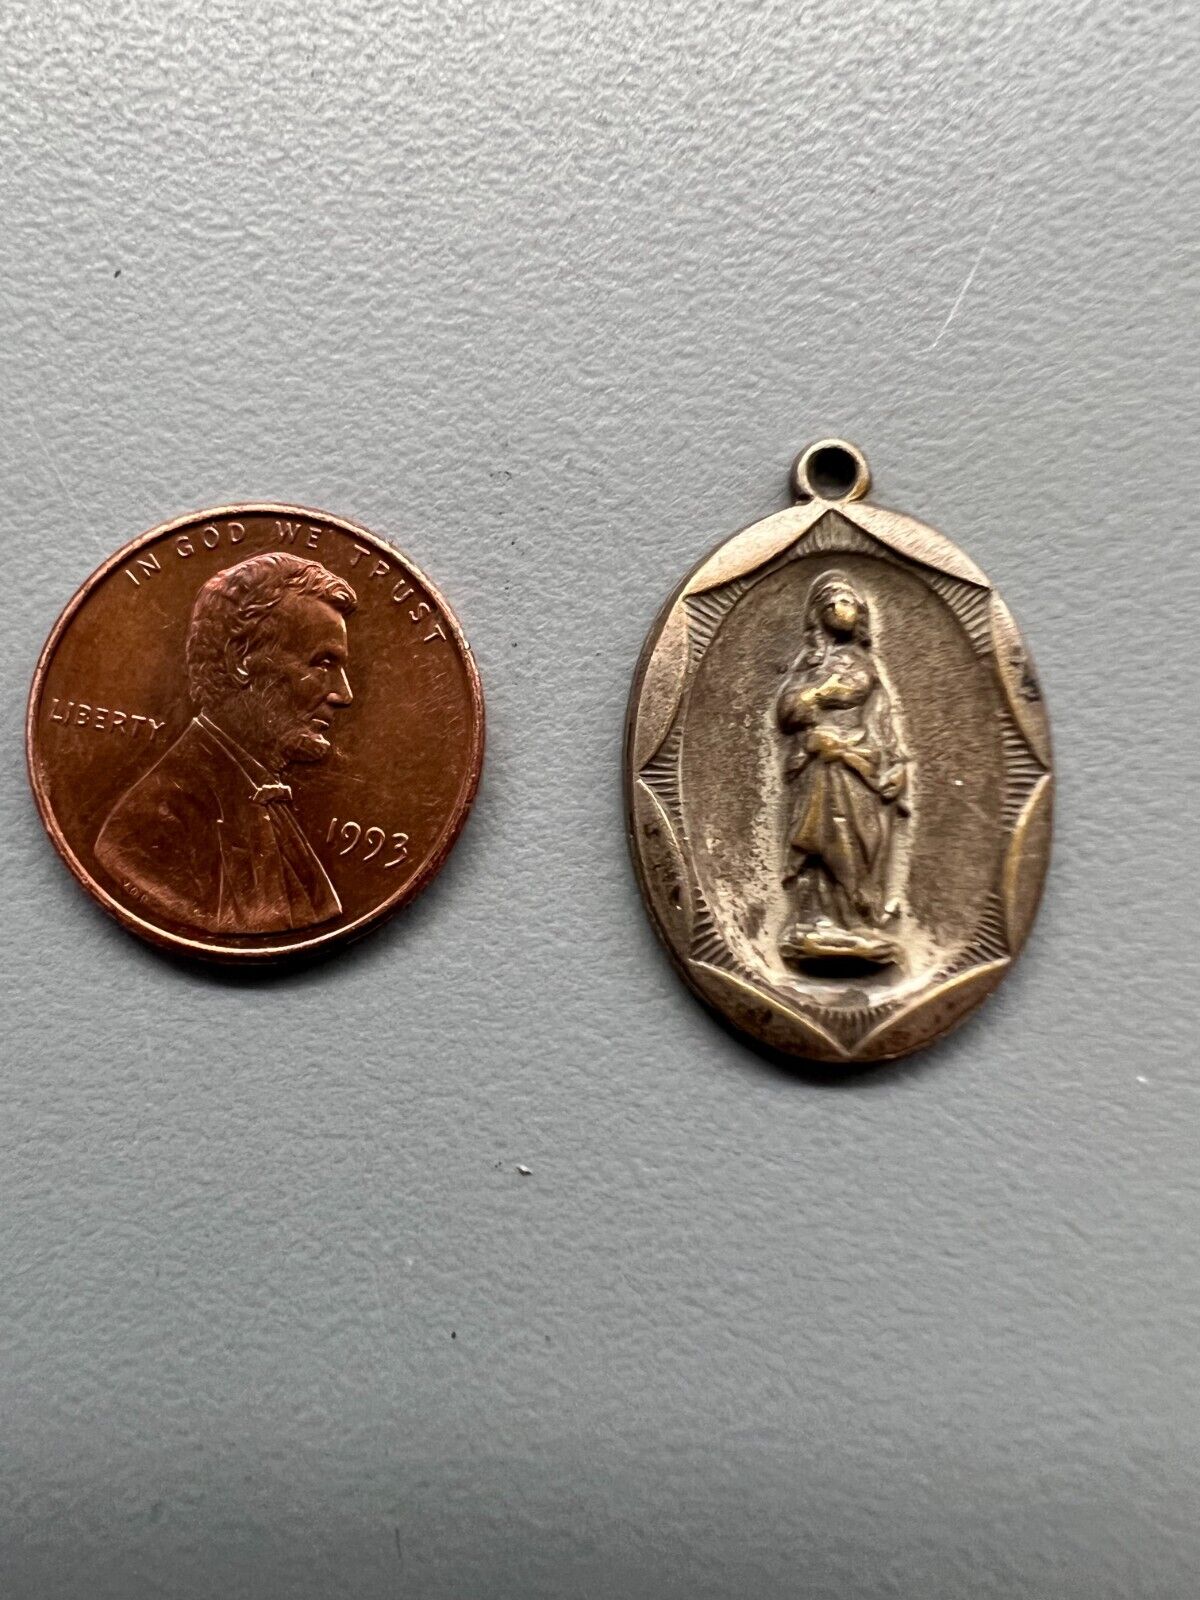 Vintage St. Philomena Medal Pray for us key ring fob, charm, pendant